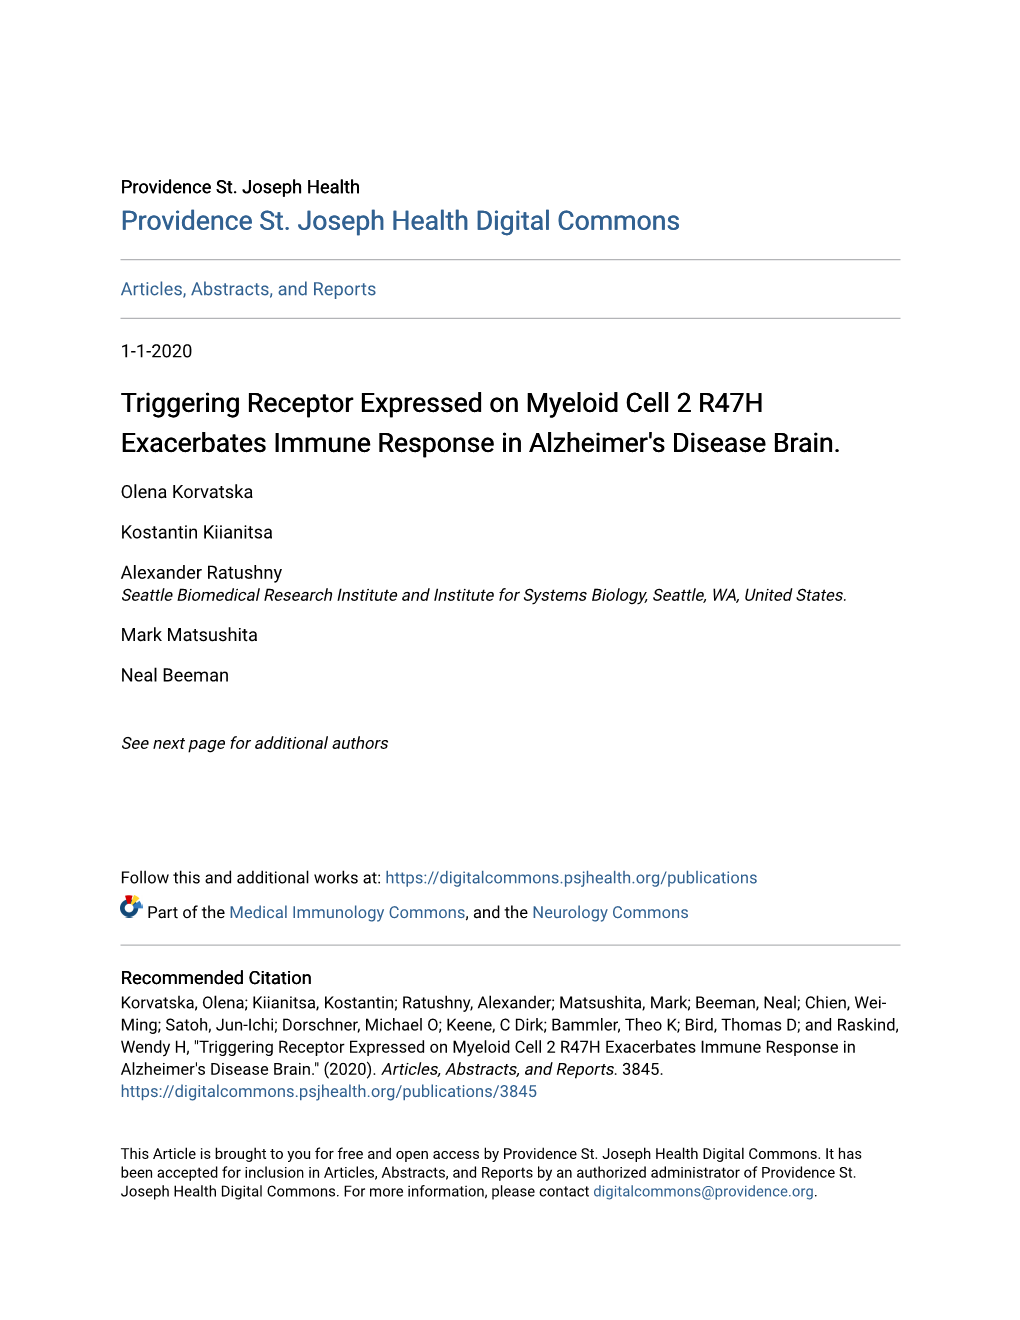 Triggering Receptor Expressed on Myeloid Cell 2 R47H Exacerbates Immune Response in Alzheimer's Disease Brain